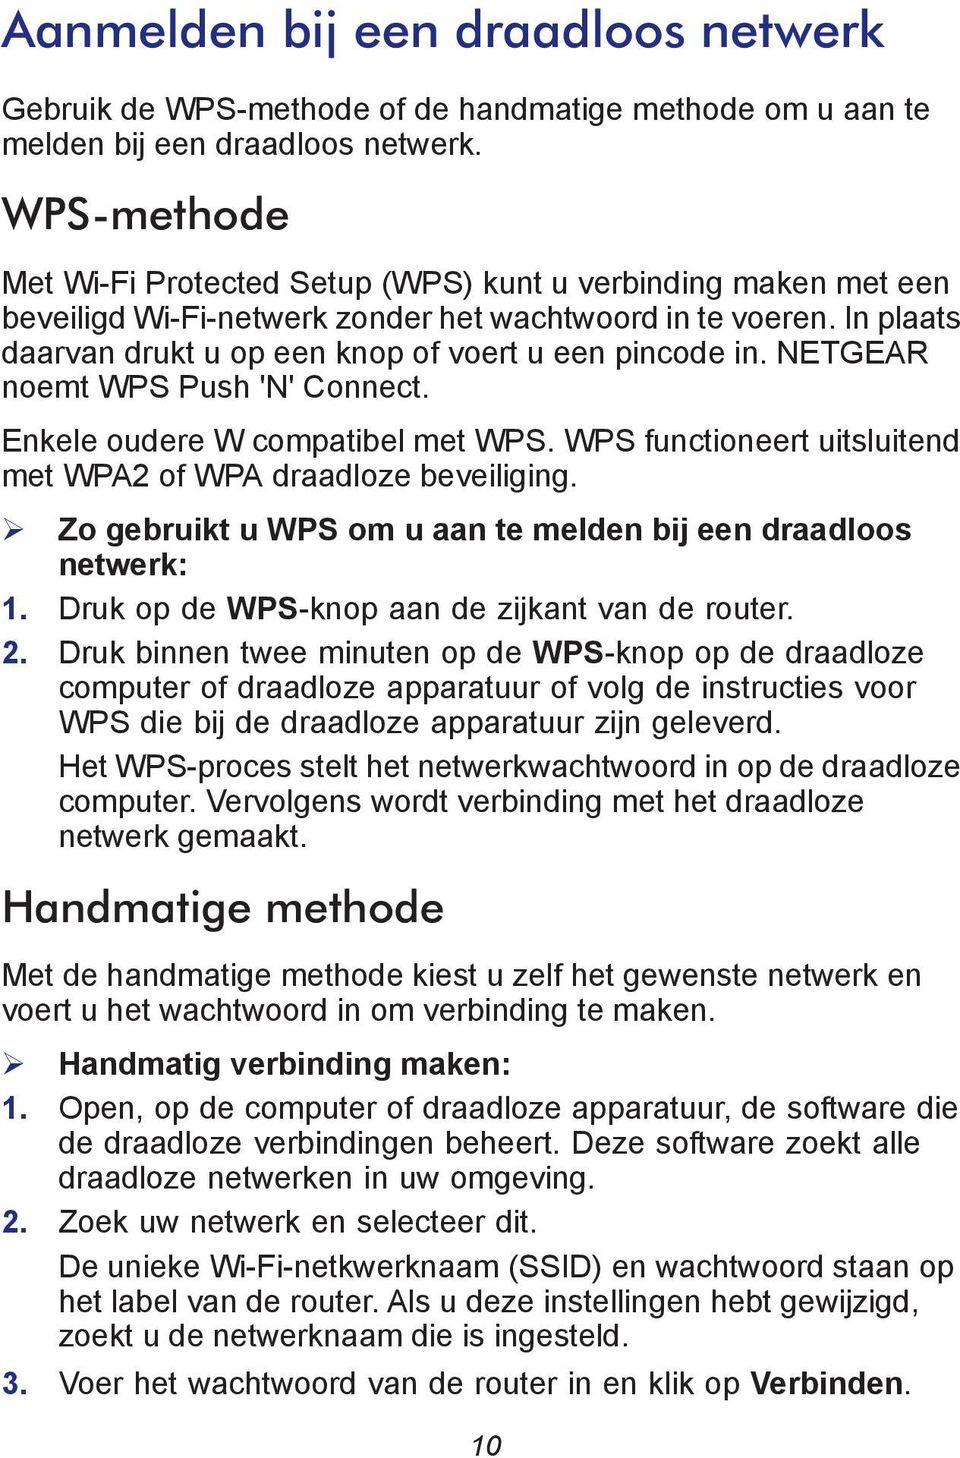 NETGEAR noemt WPS Push 'N' Connect. Enkele oudere W compatibel met WPS. WPS functioneert uitsluitend met WPA2 of WPA draadloze beveiliging.